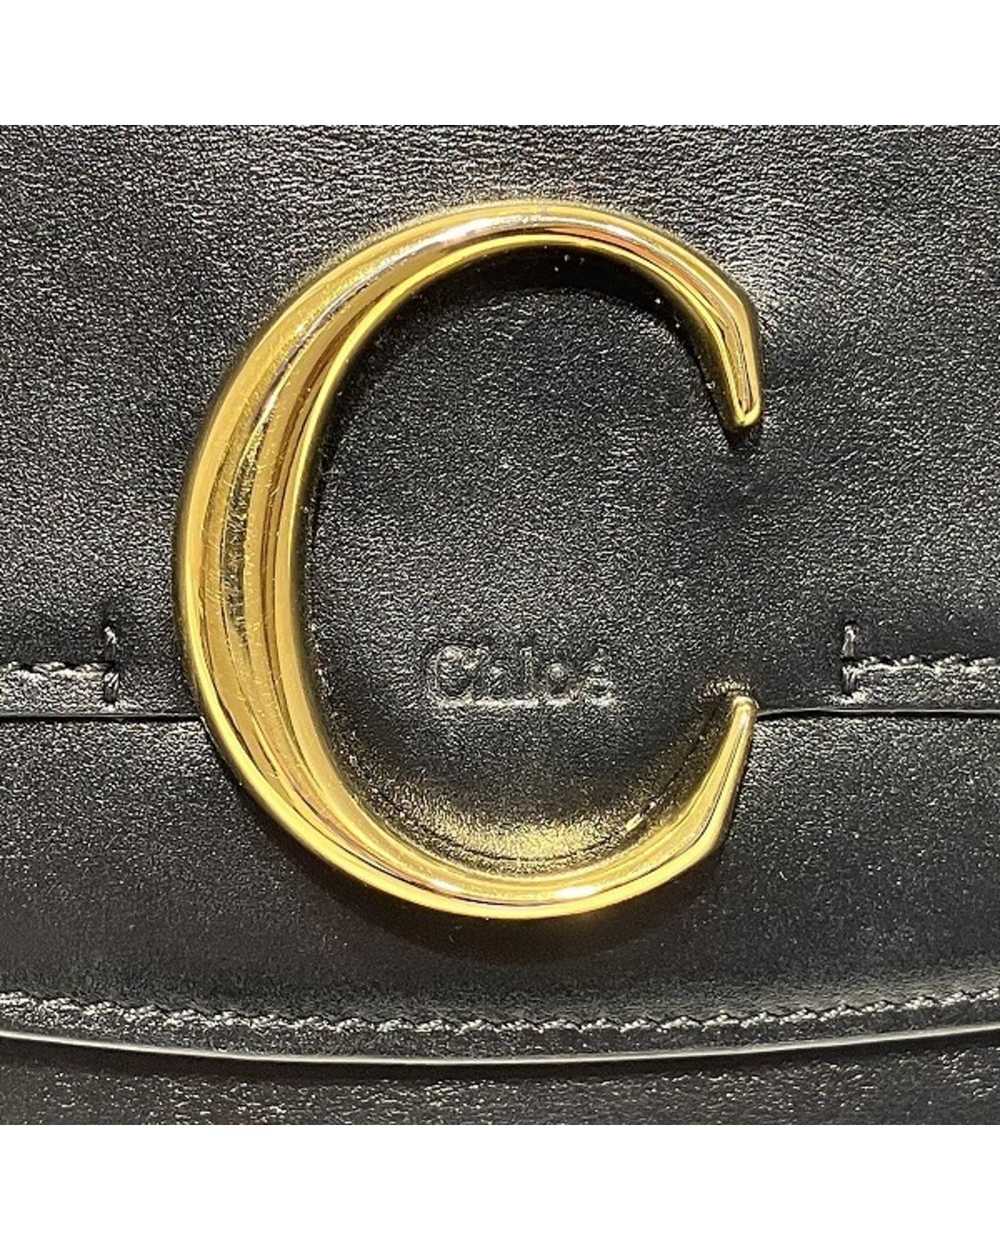 Chloe Refined Black Leather Long Wallet for Women - image 9